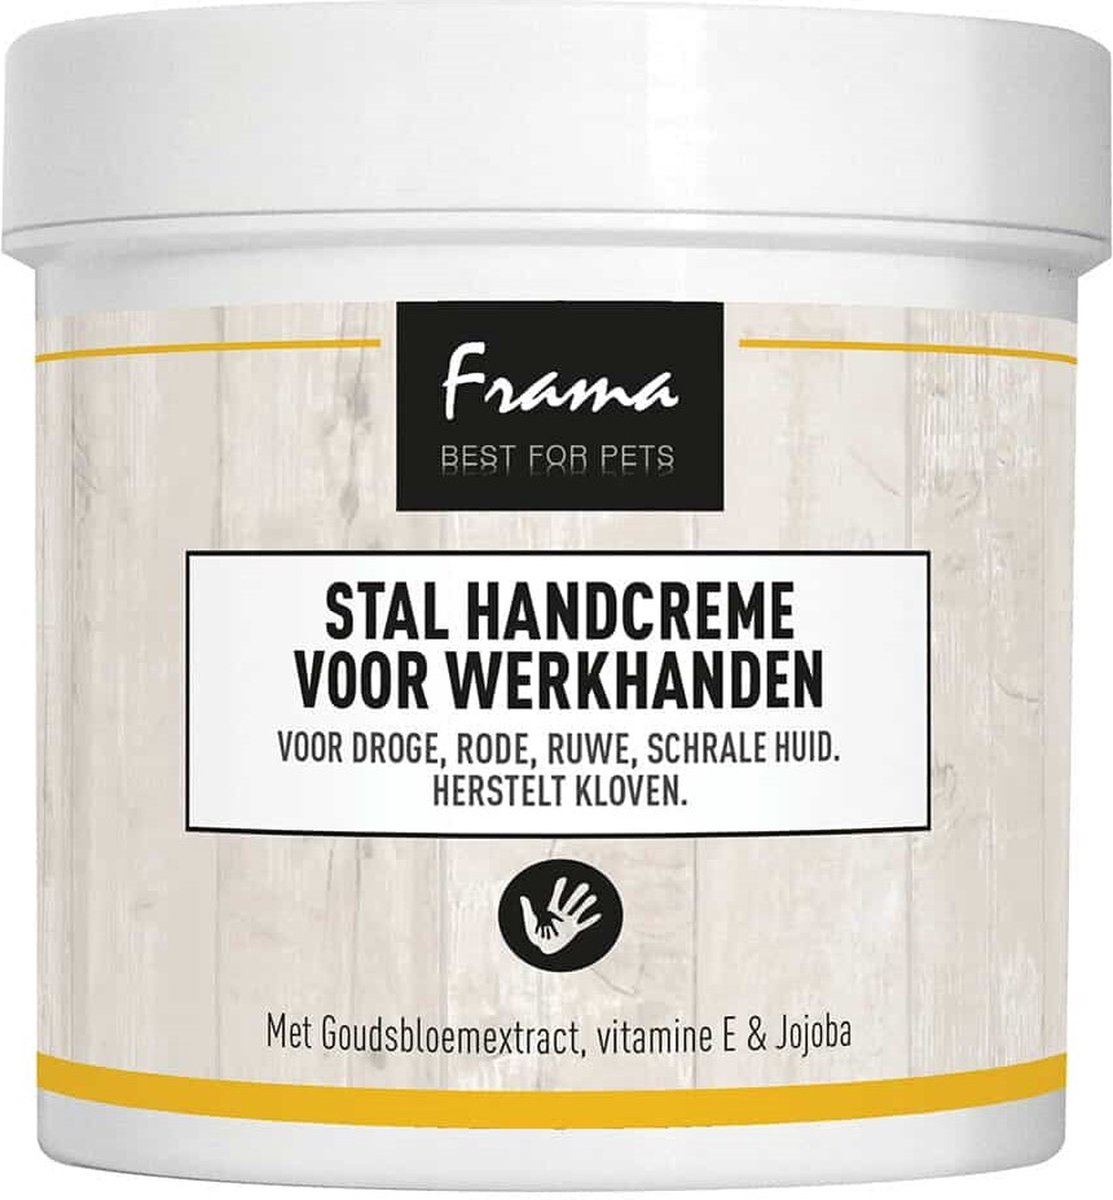 Frama Stal handcrème voor werkhanden 250ml